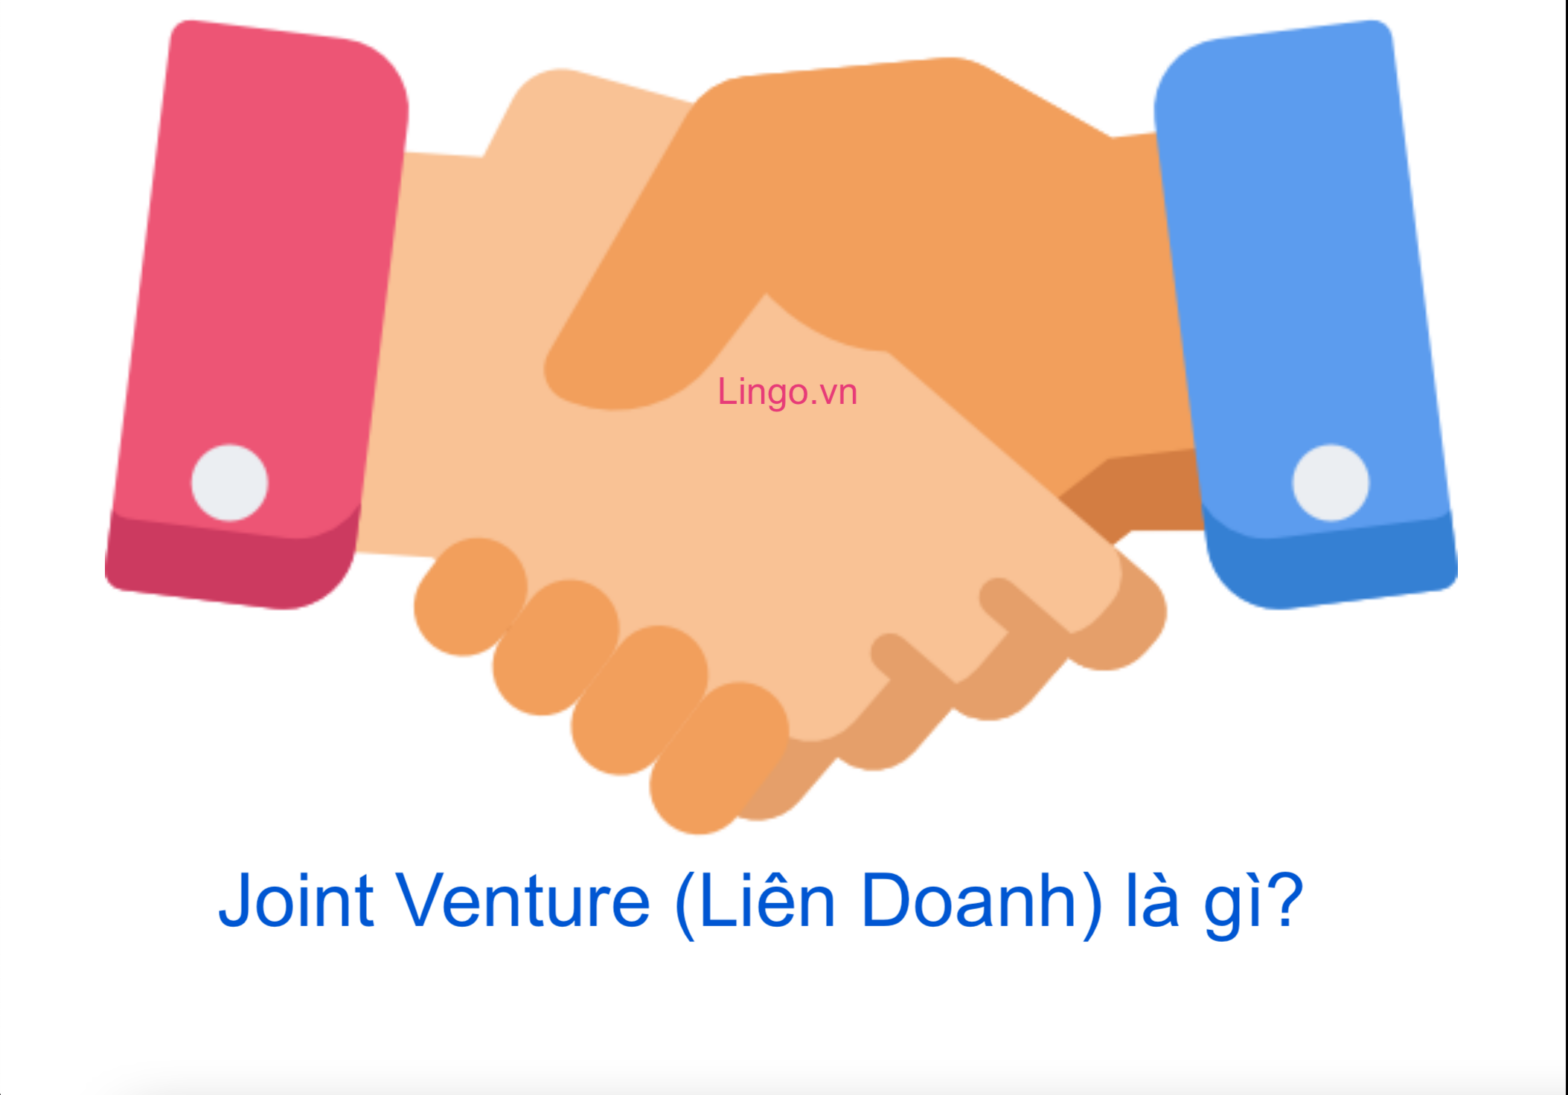 Joint-venture-la-gi?